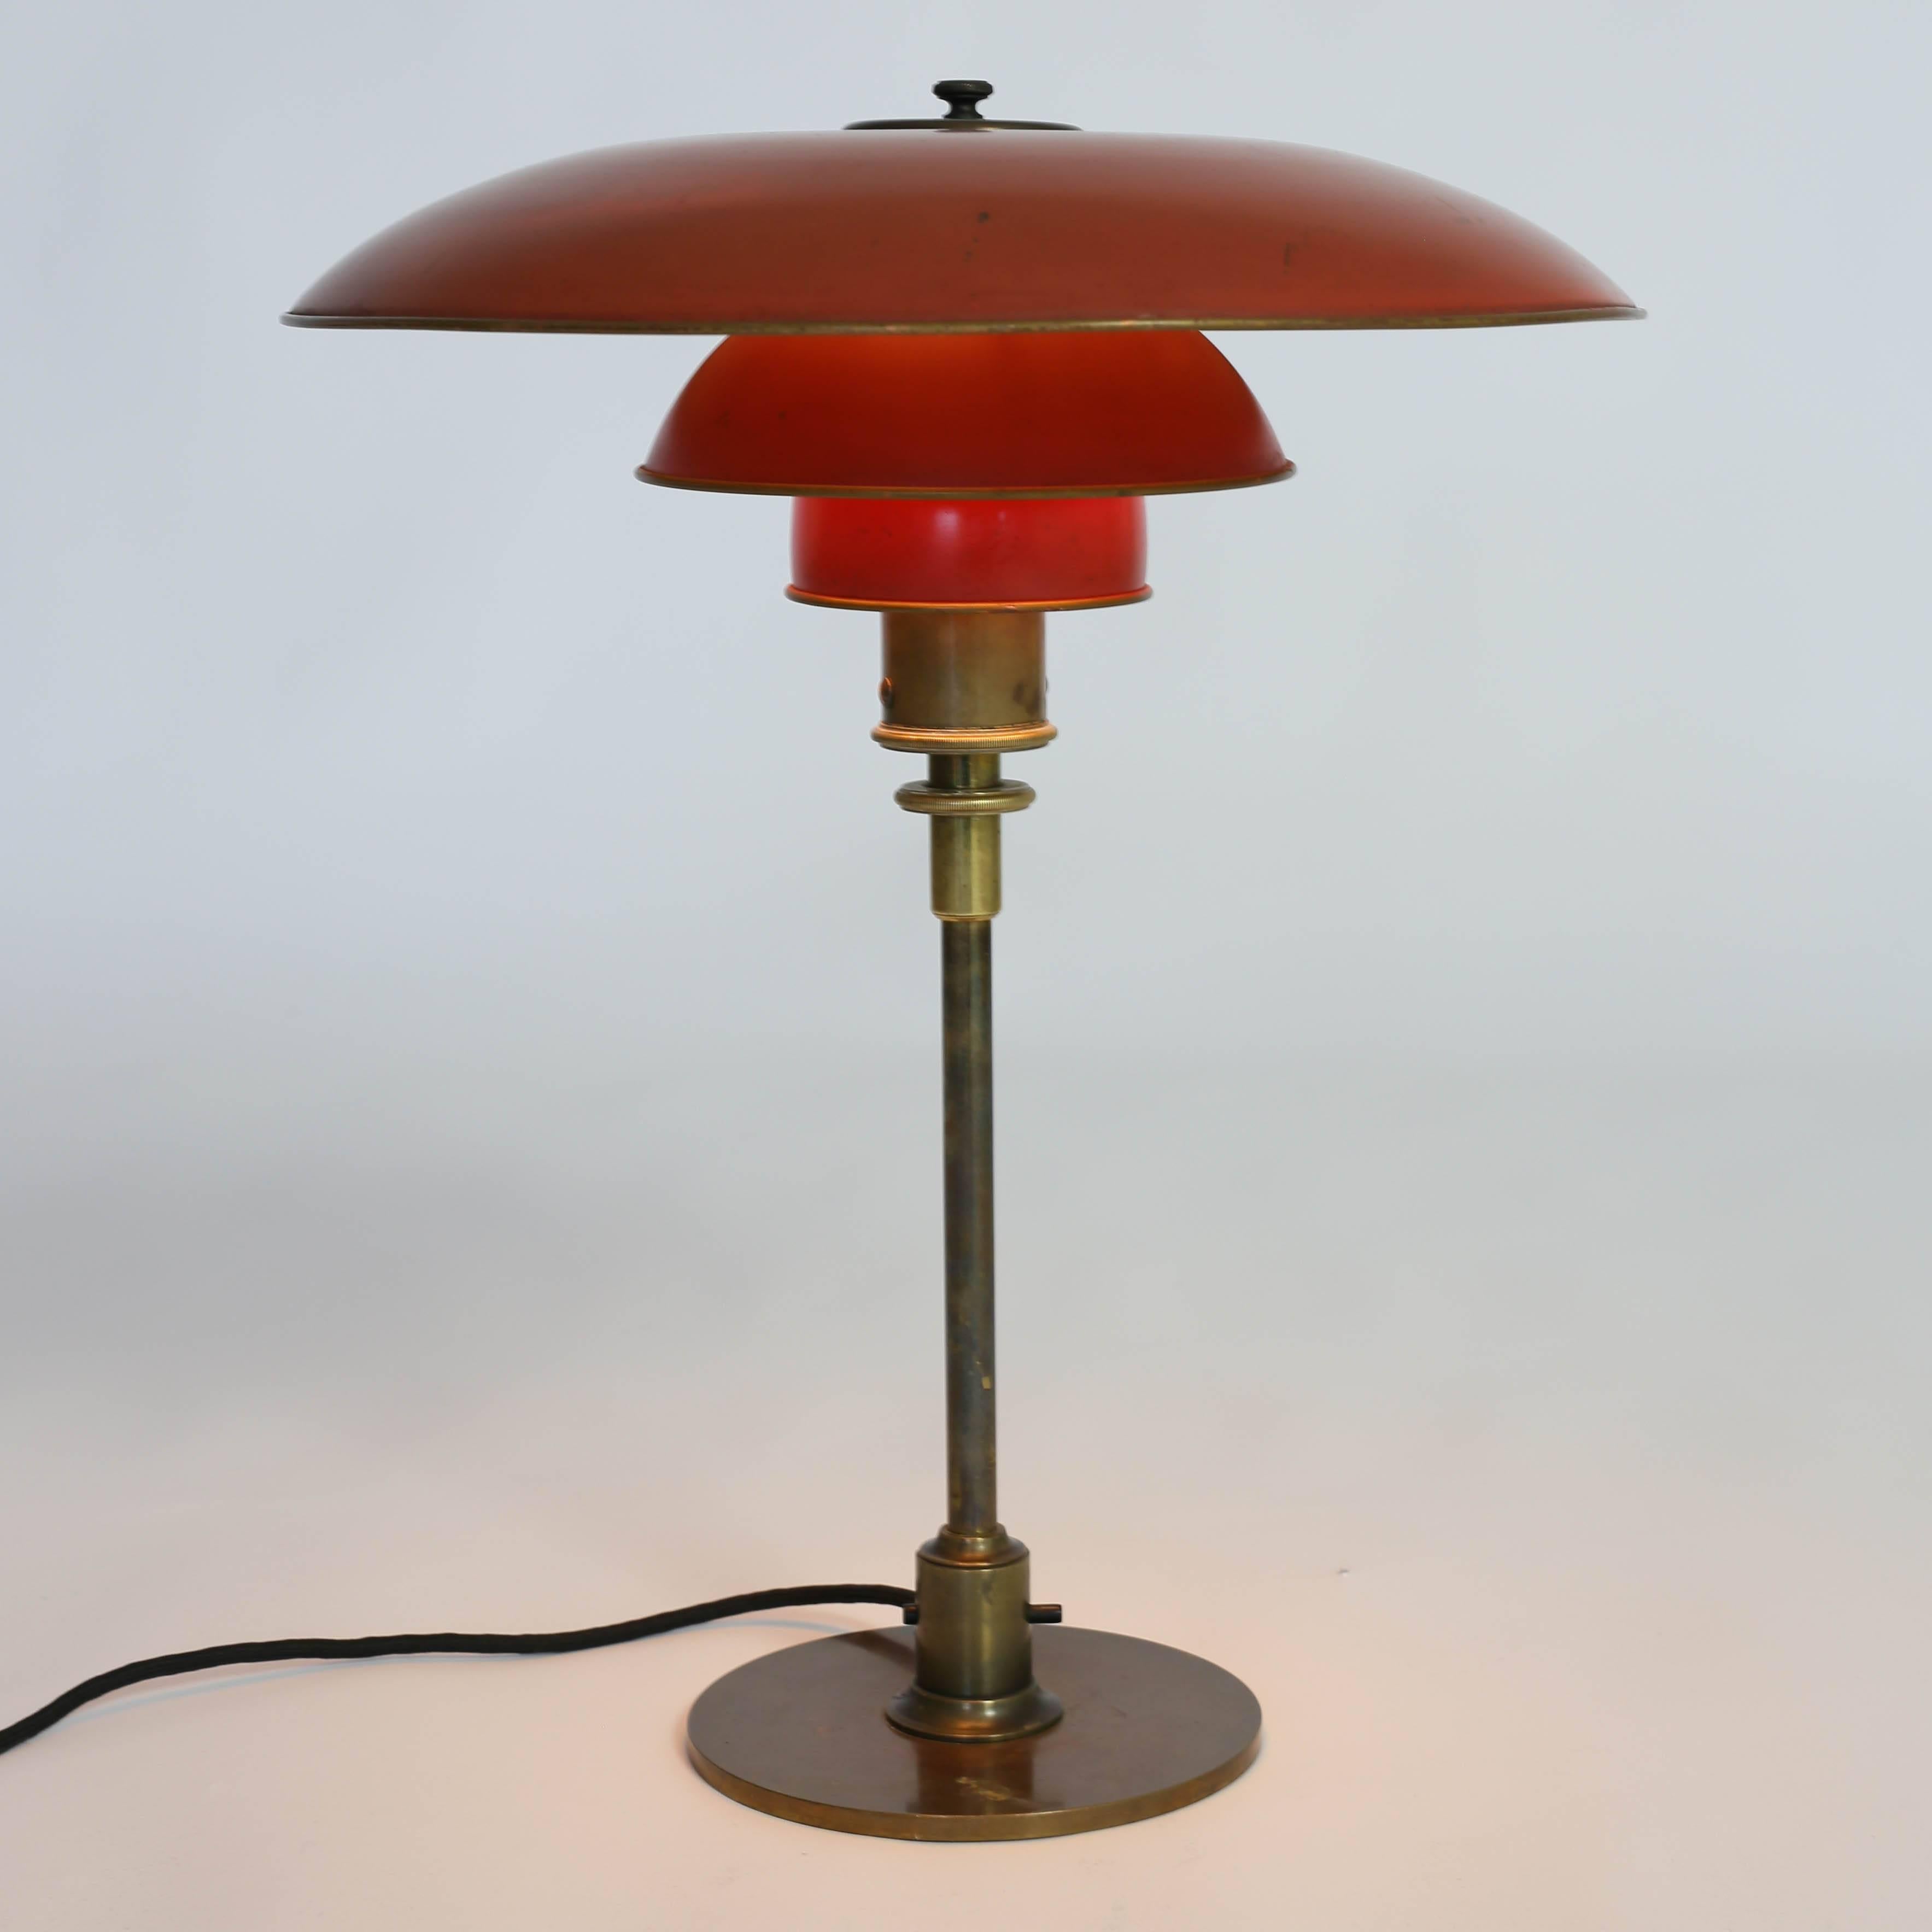 Danish Poul Henningsen Table Lamp, 1927, Pat. Appl